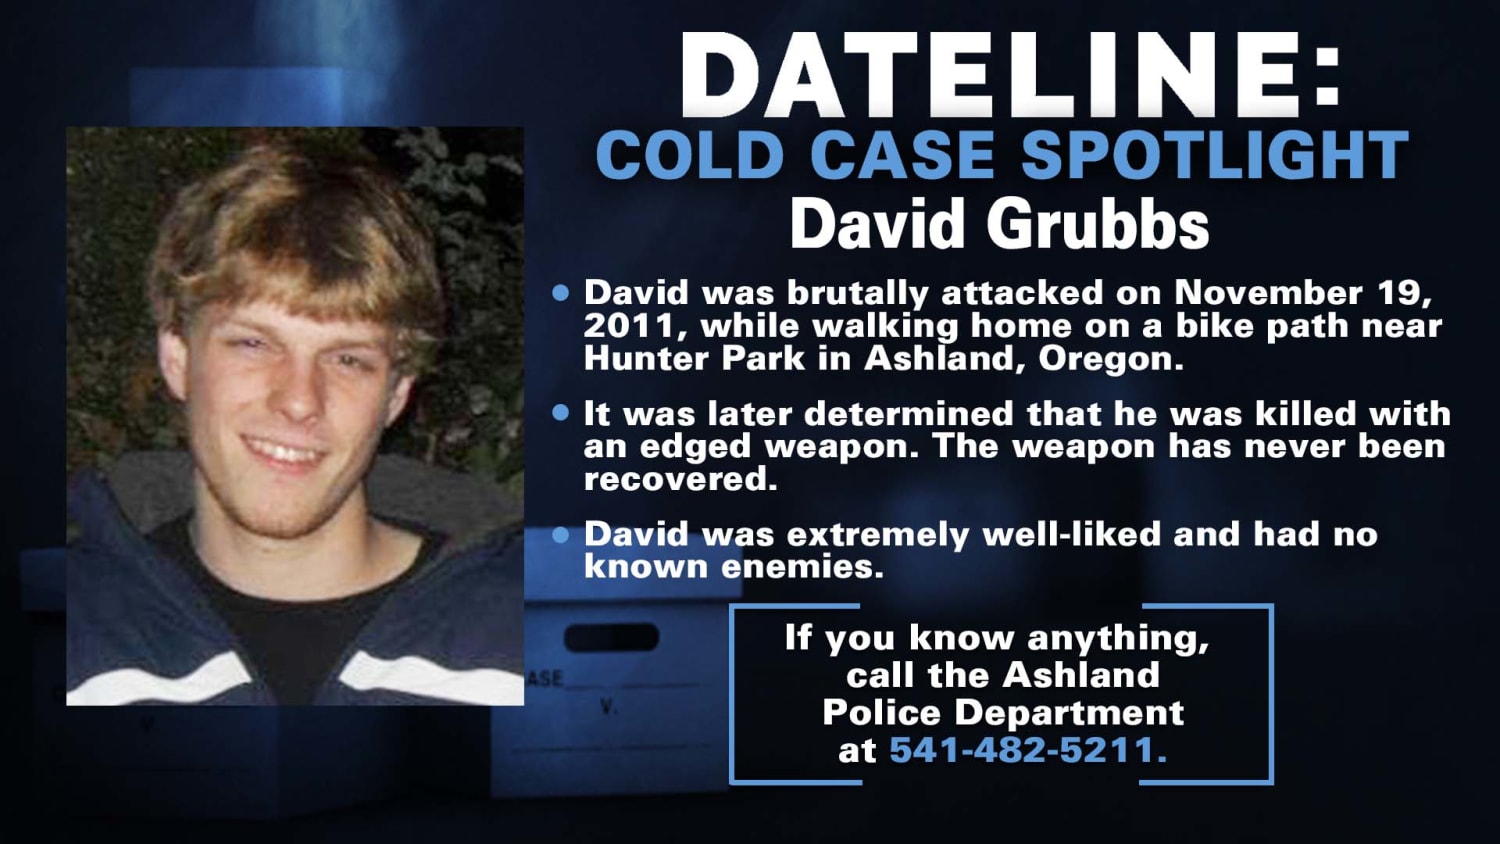 Community still looking for answers in violent 2011 murder of David Grubbs on Ashland, Oregon bike path